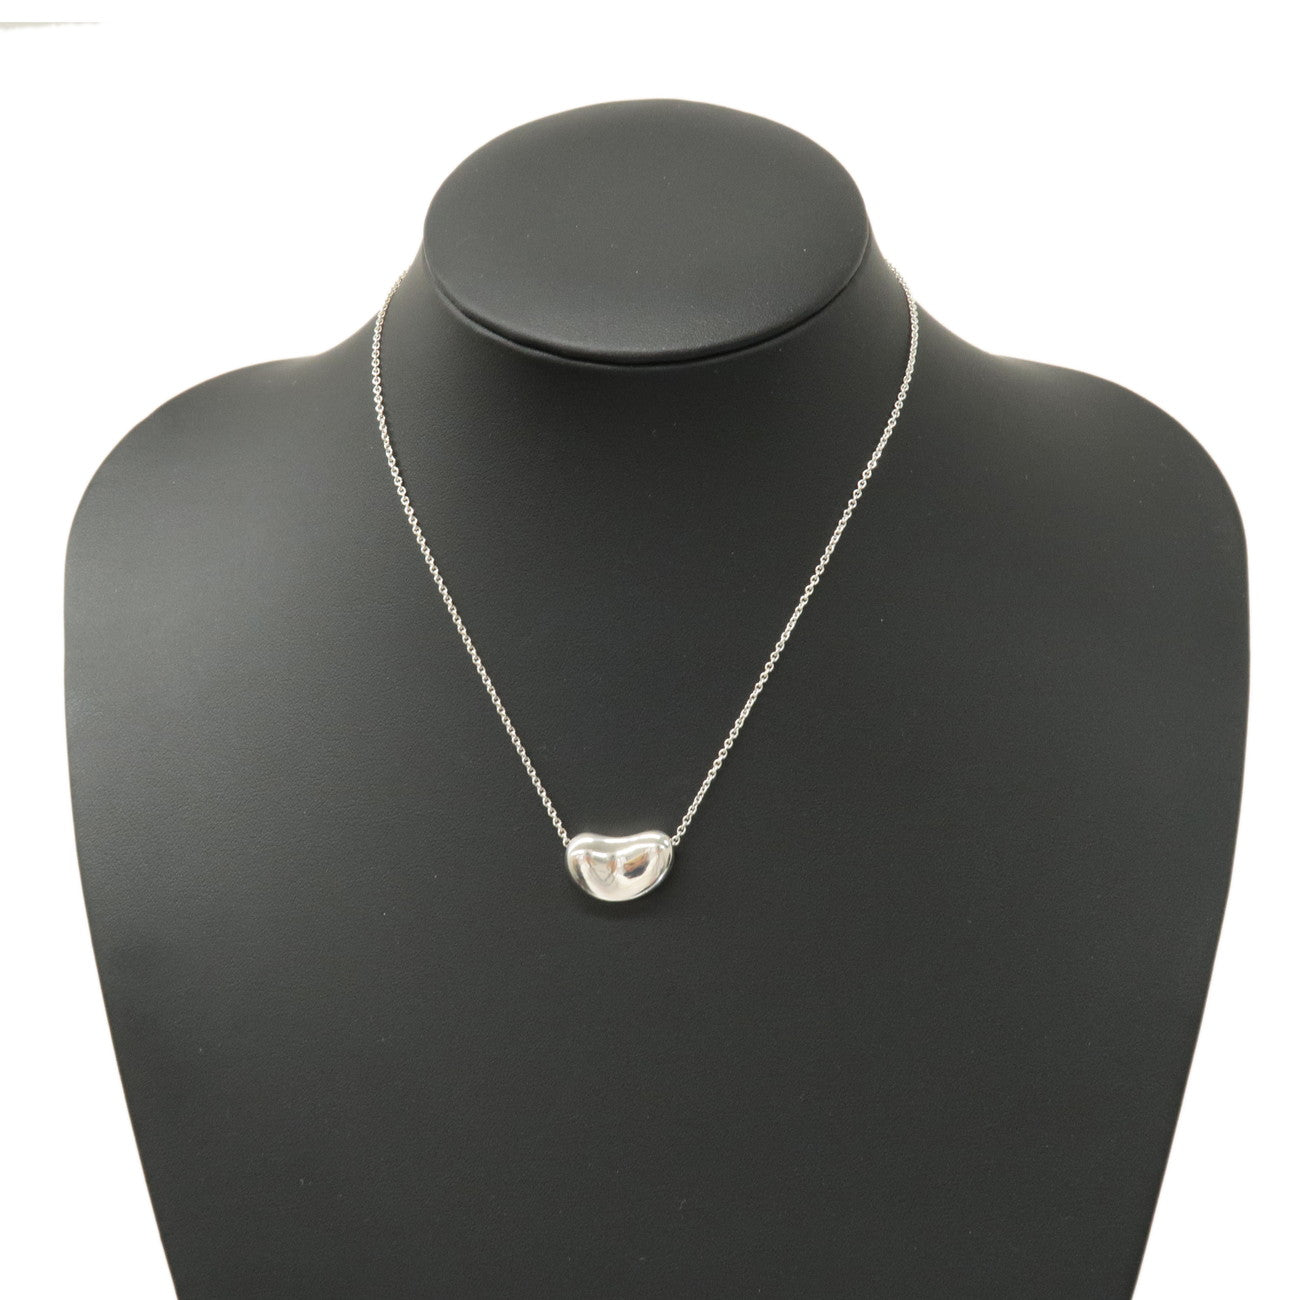 Tiffany&Co. Bean Necklace Medium Size Charm SV925 Silver 925